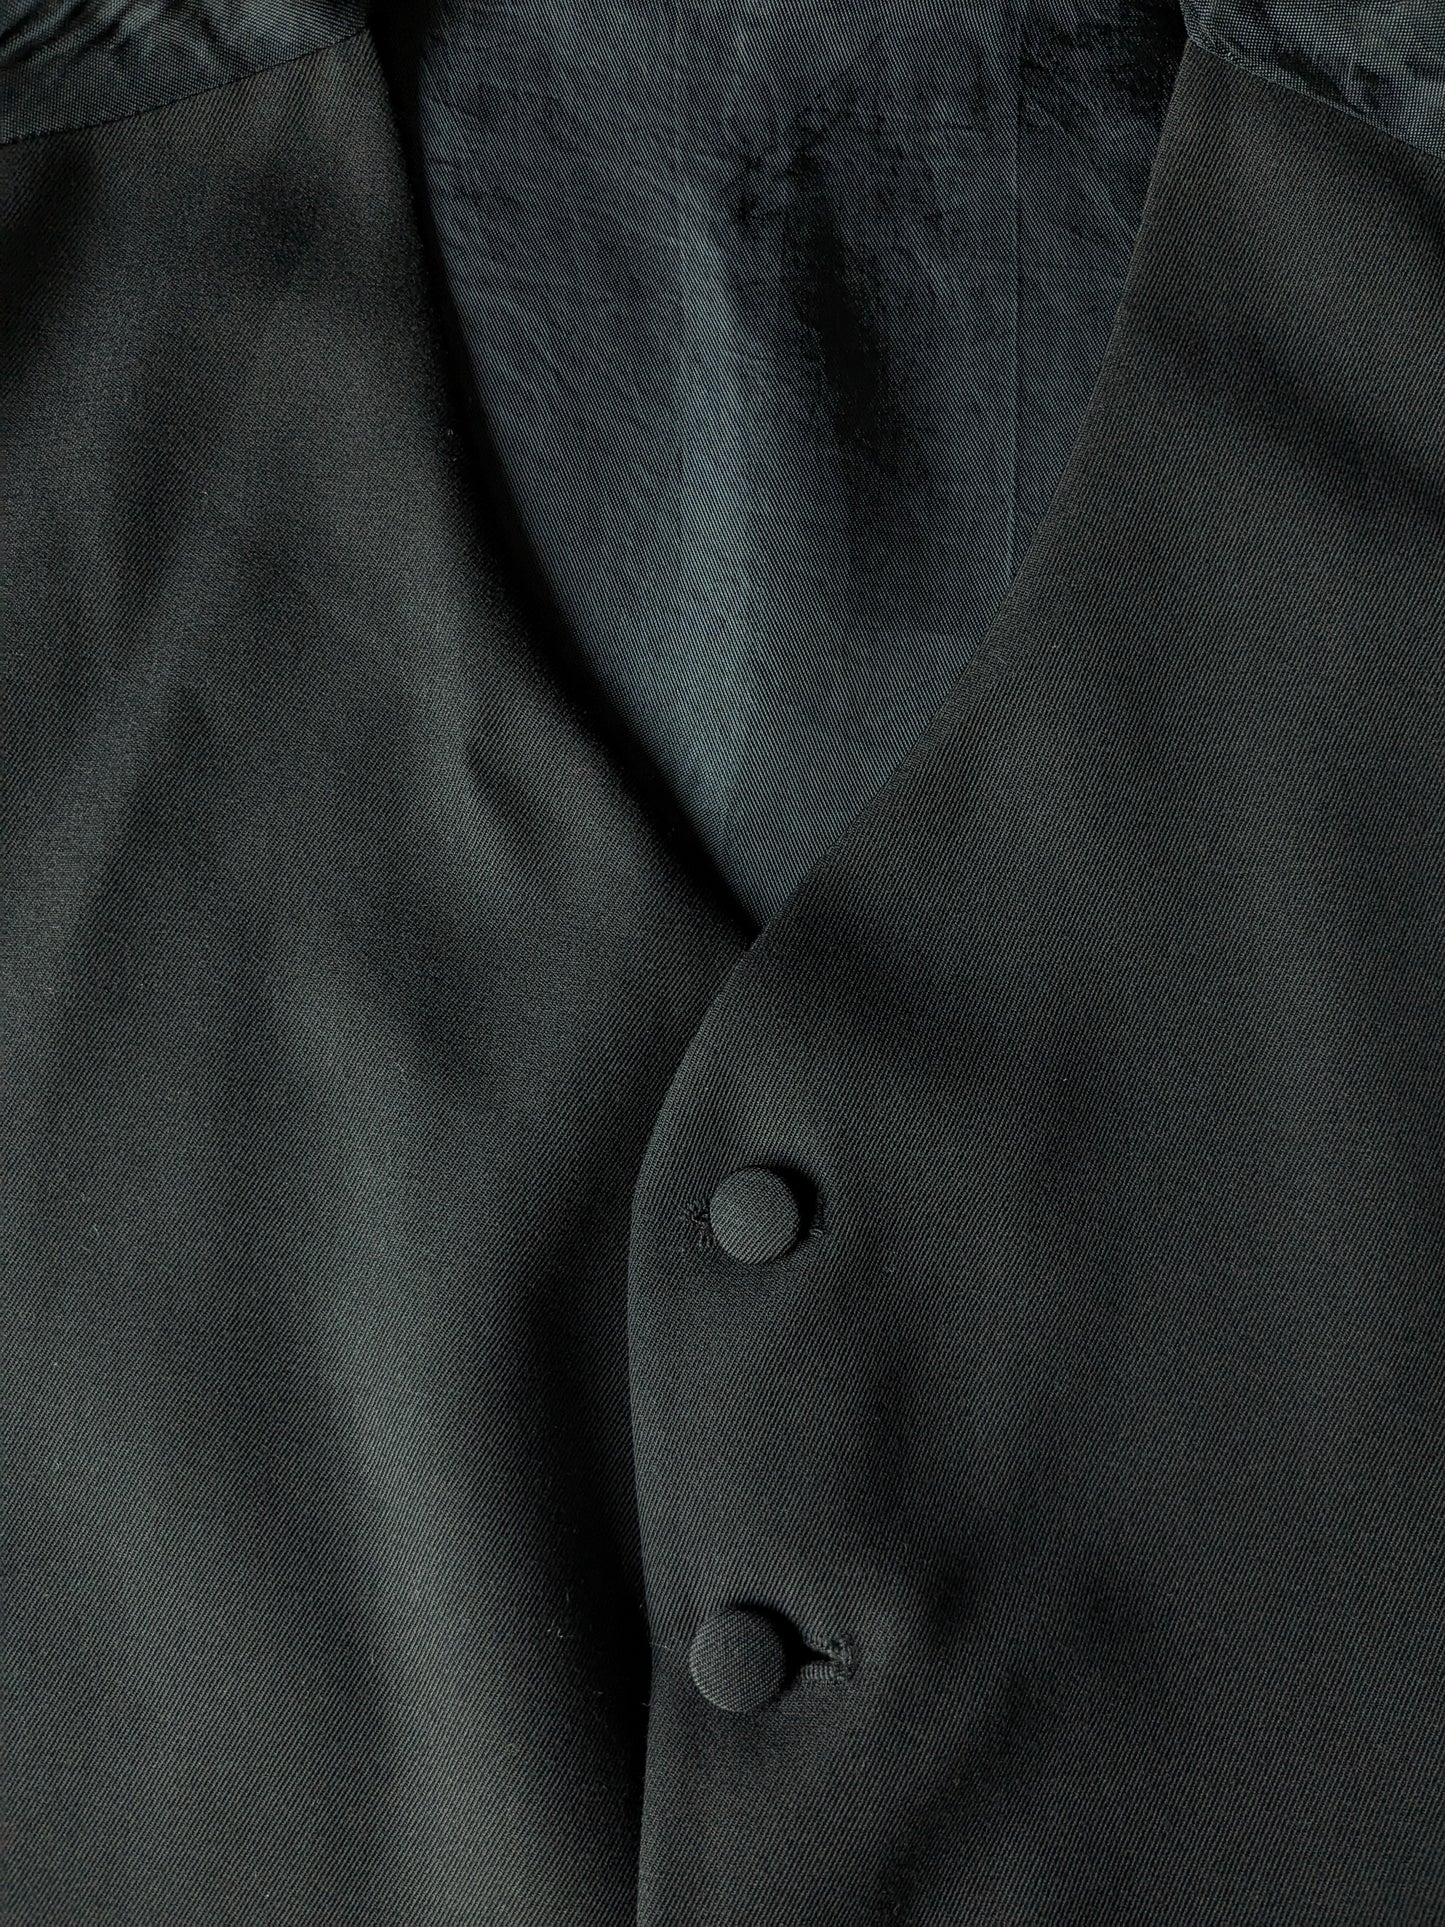 Gilet con botones tapizados. Color negro. Tamaño M. #337.